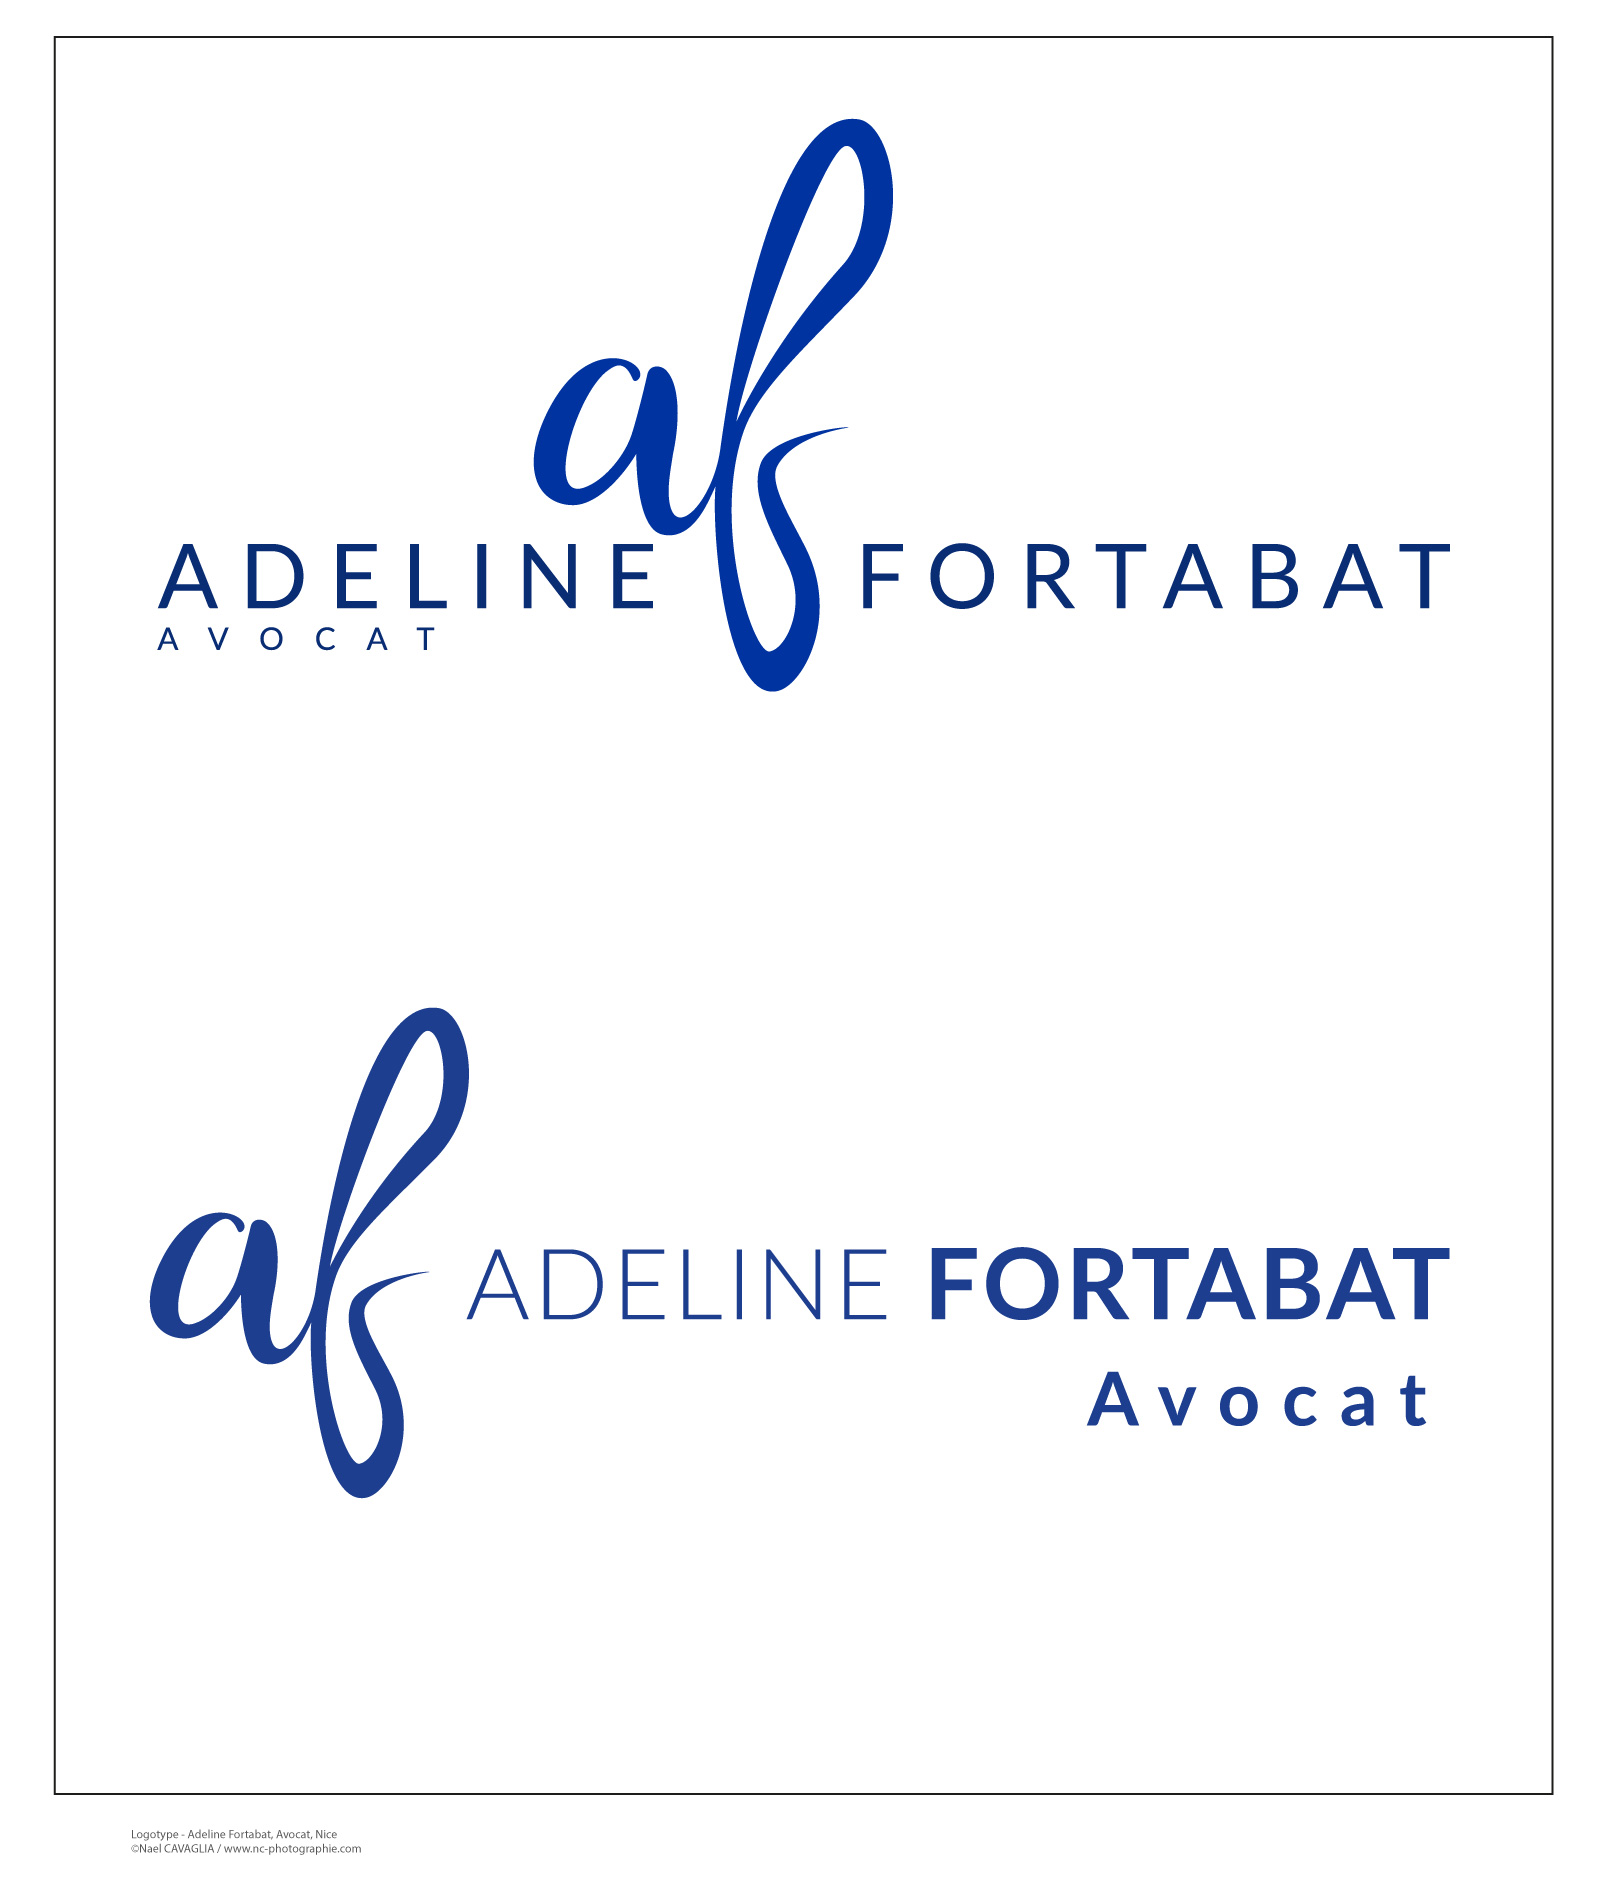 nael cavaglia -Adeline Fortabat, avocat, nice  - logotype